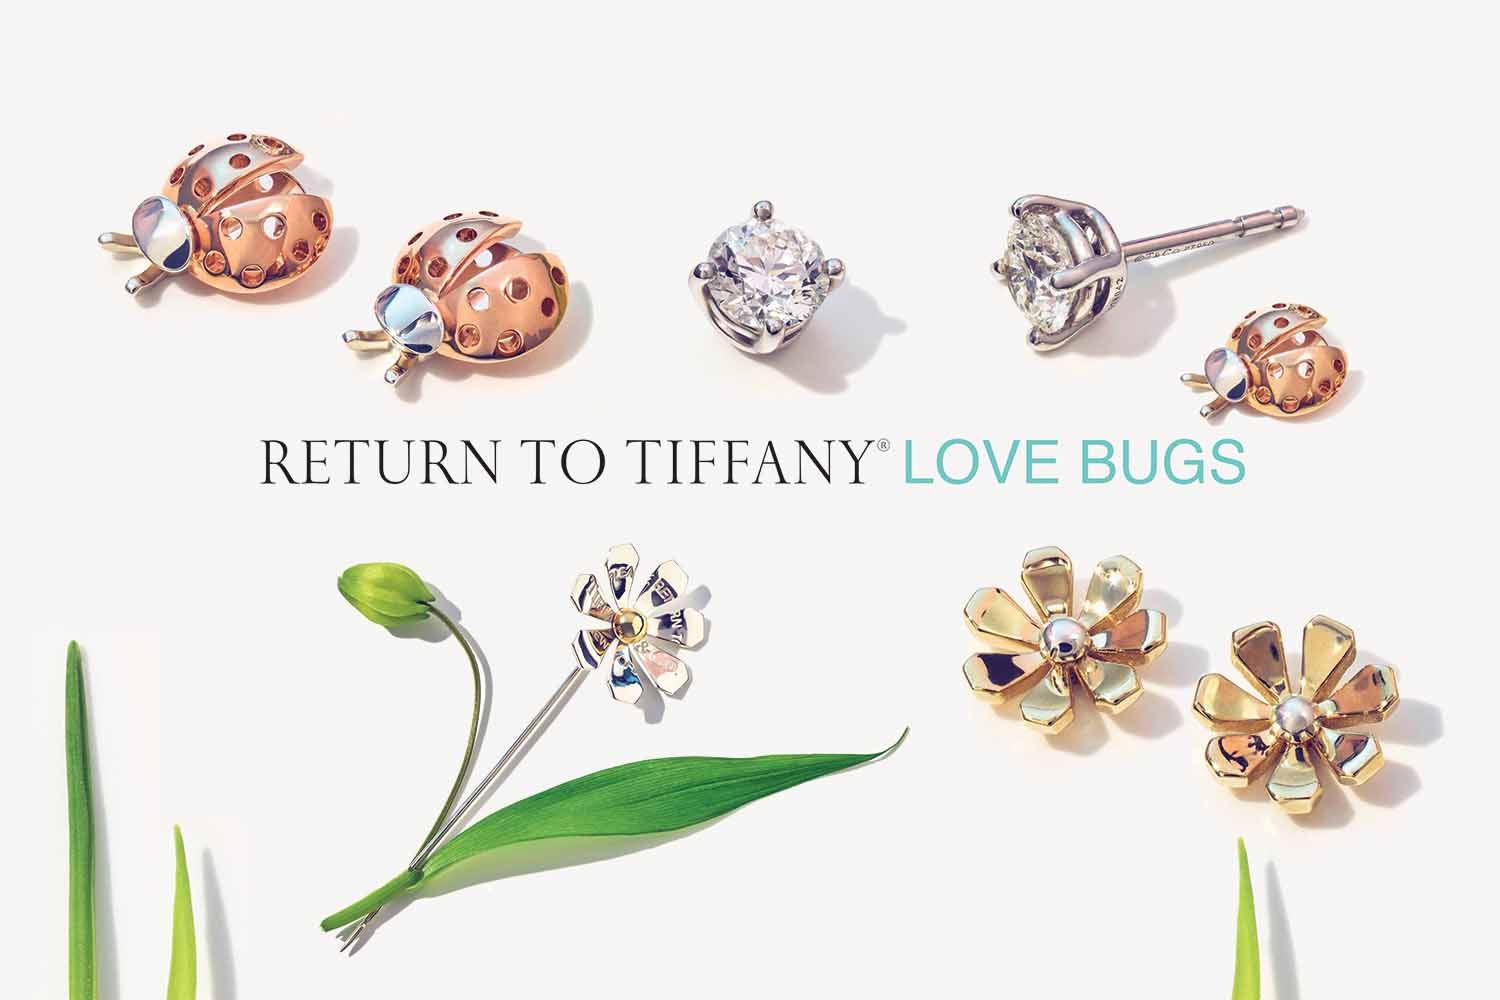 Return to Tiffany Love Bugs 2019 (13)